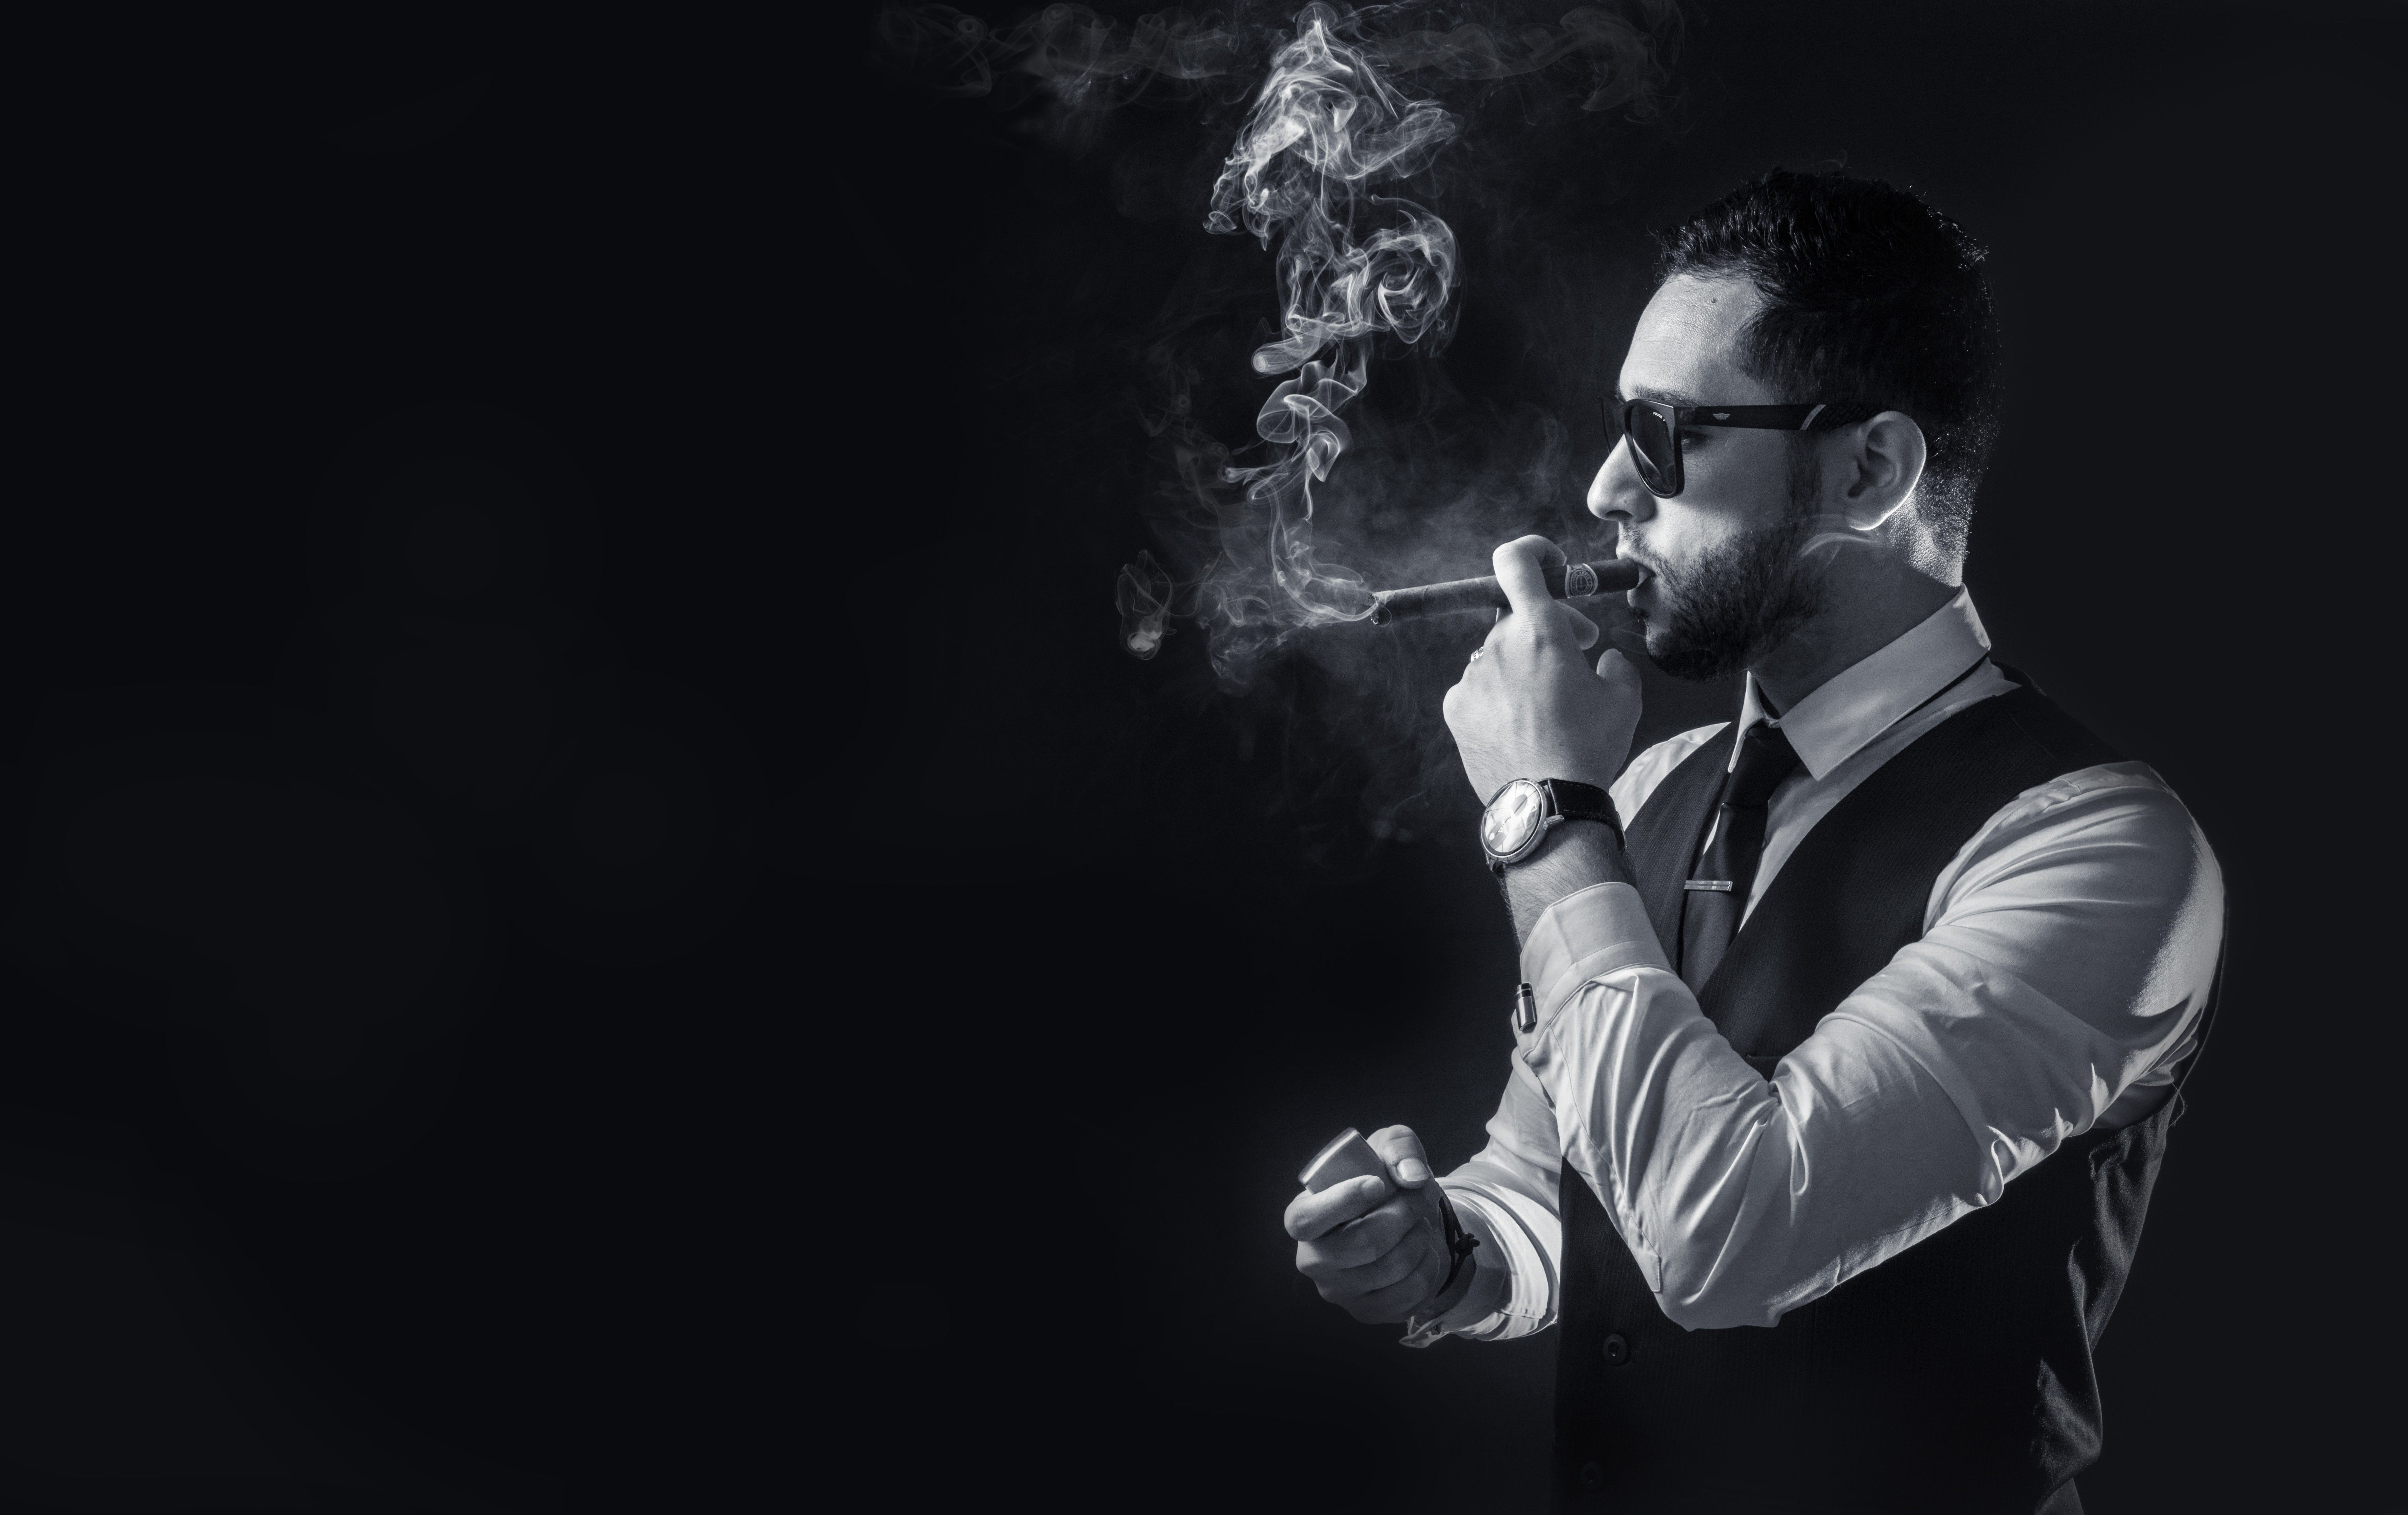 Wallpaper, men, watch, smoke, smoking, suits, cigars, guitarist, light, darkness, black and white, monochrome photography, film noir 7283x4583